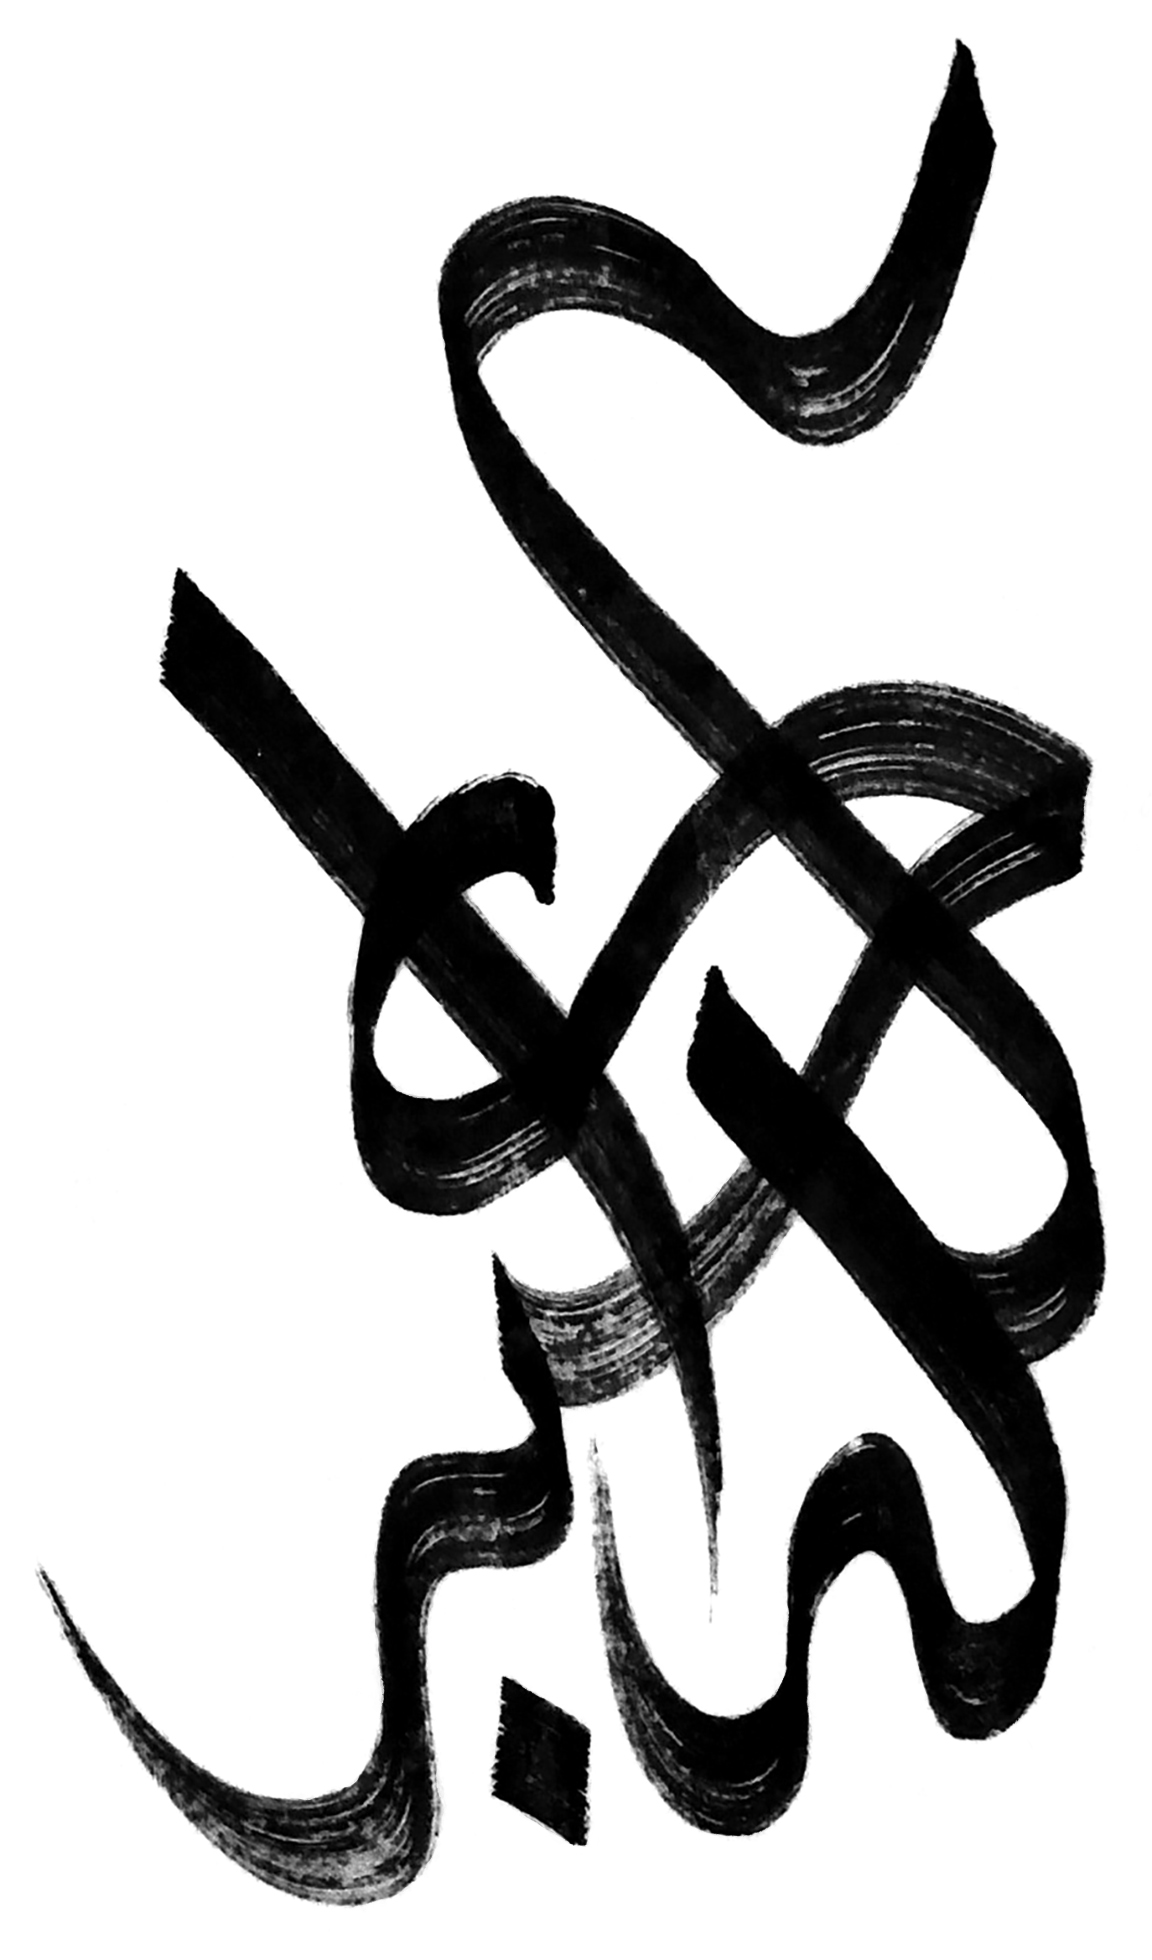 516 - Calligraphy - Bremer